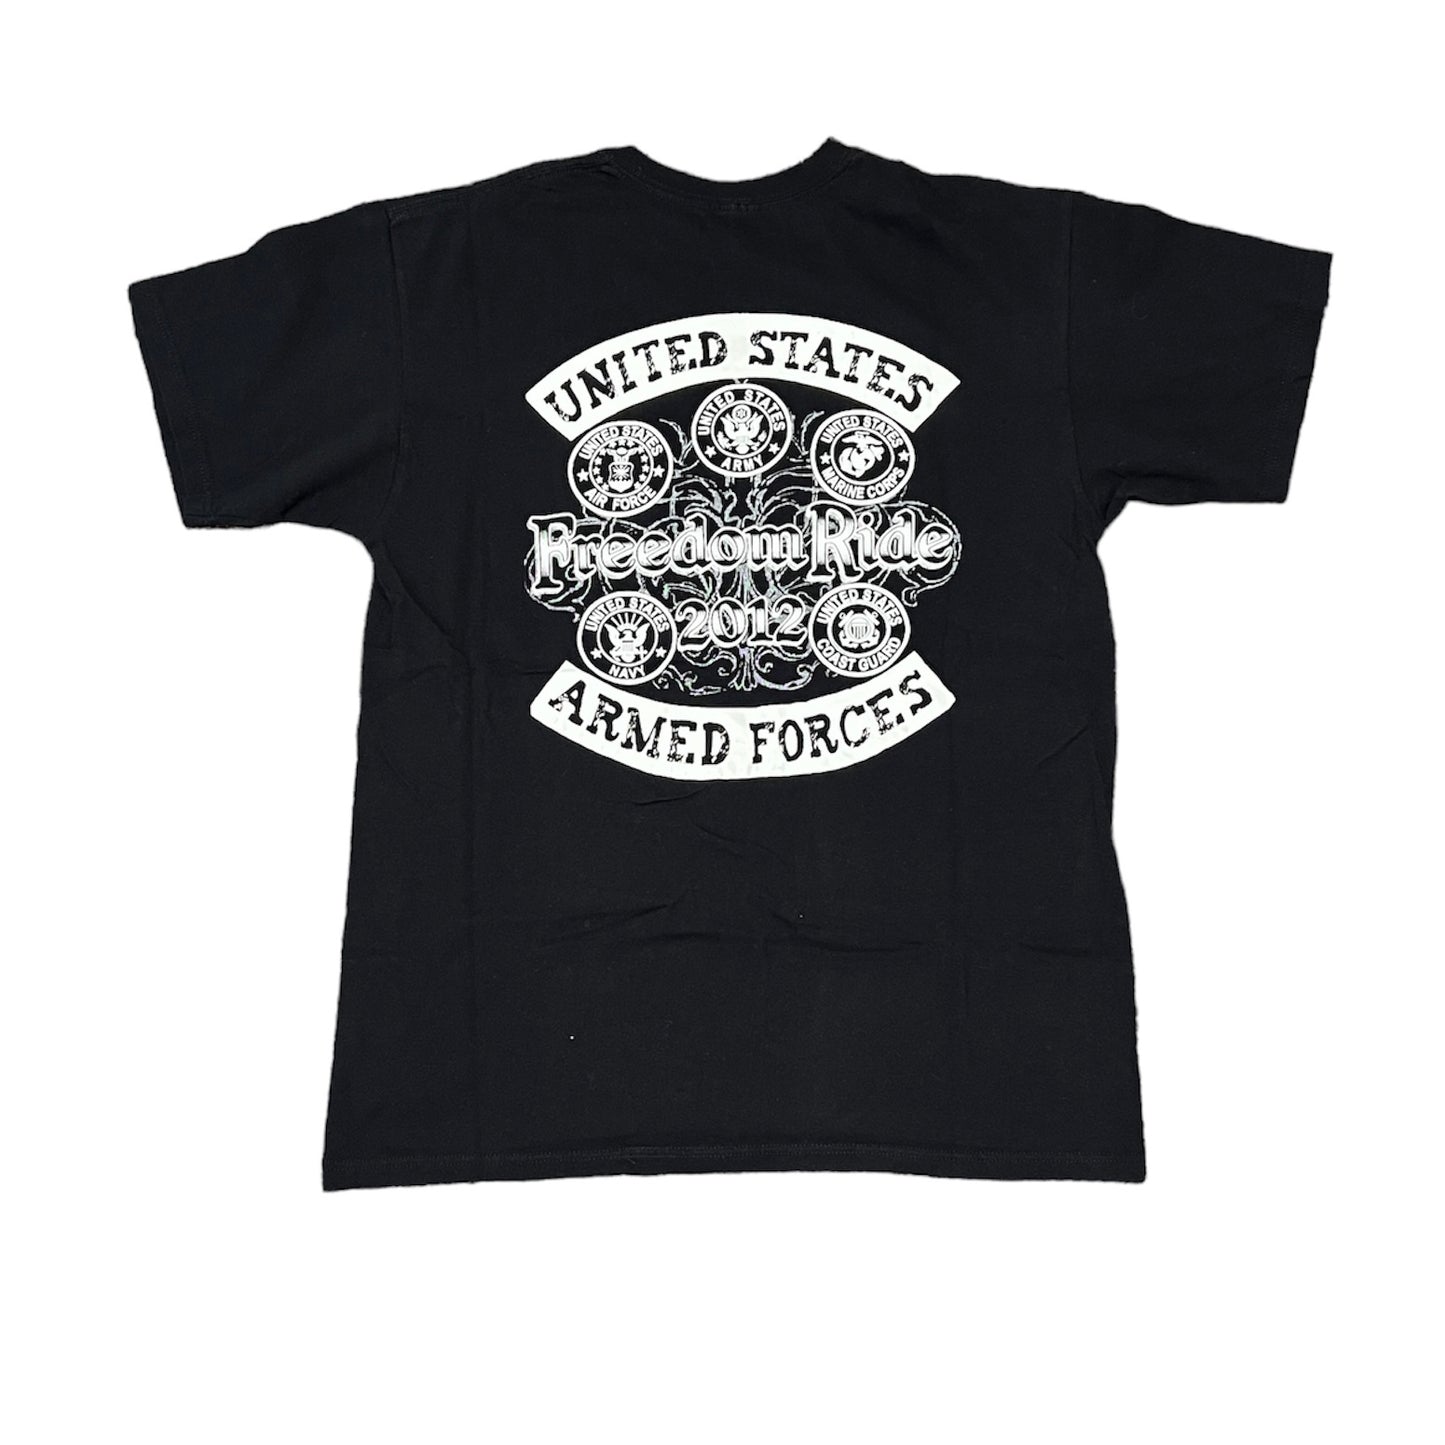 Harley Davidson of Naples T-Shirt Size Large